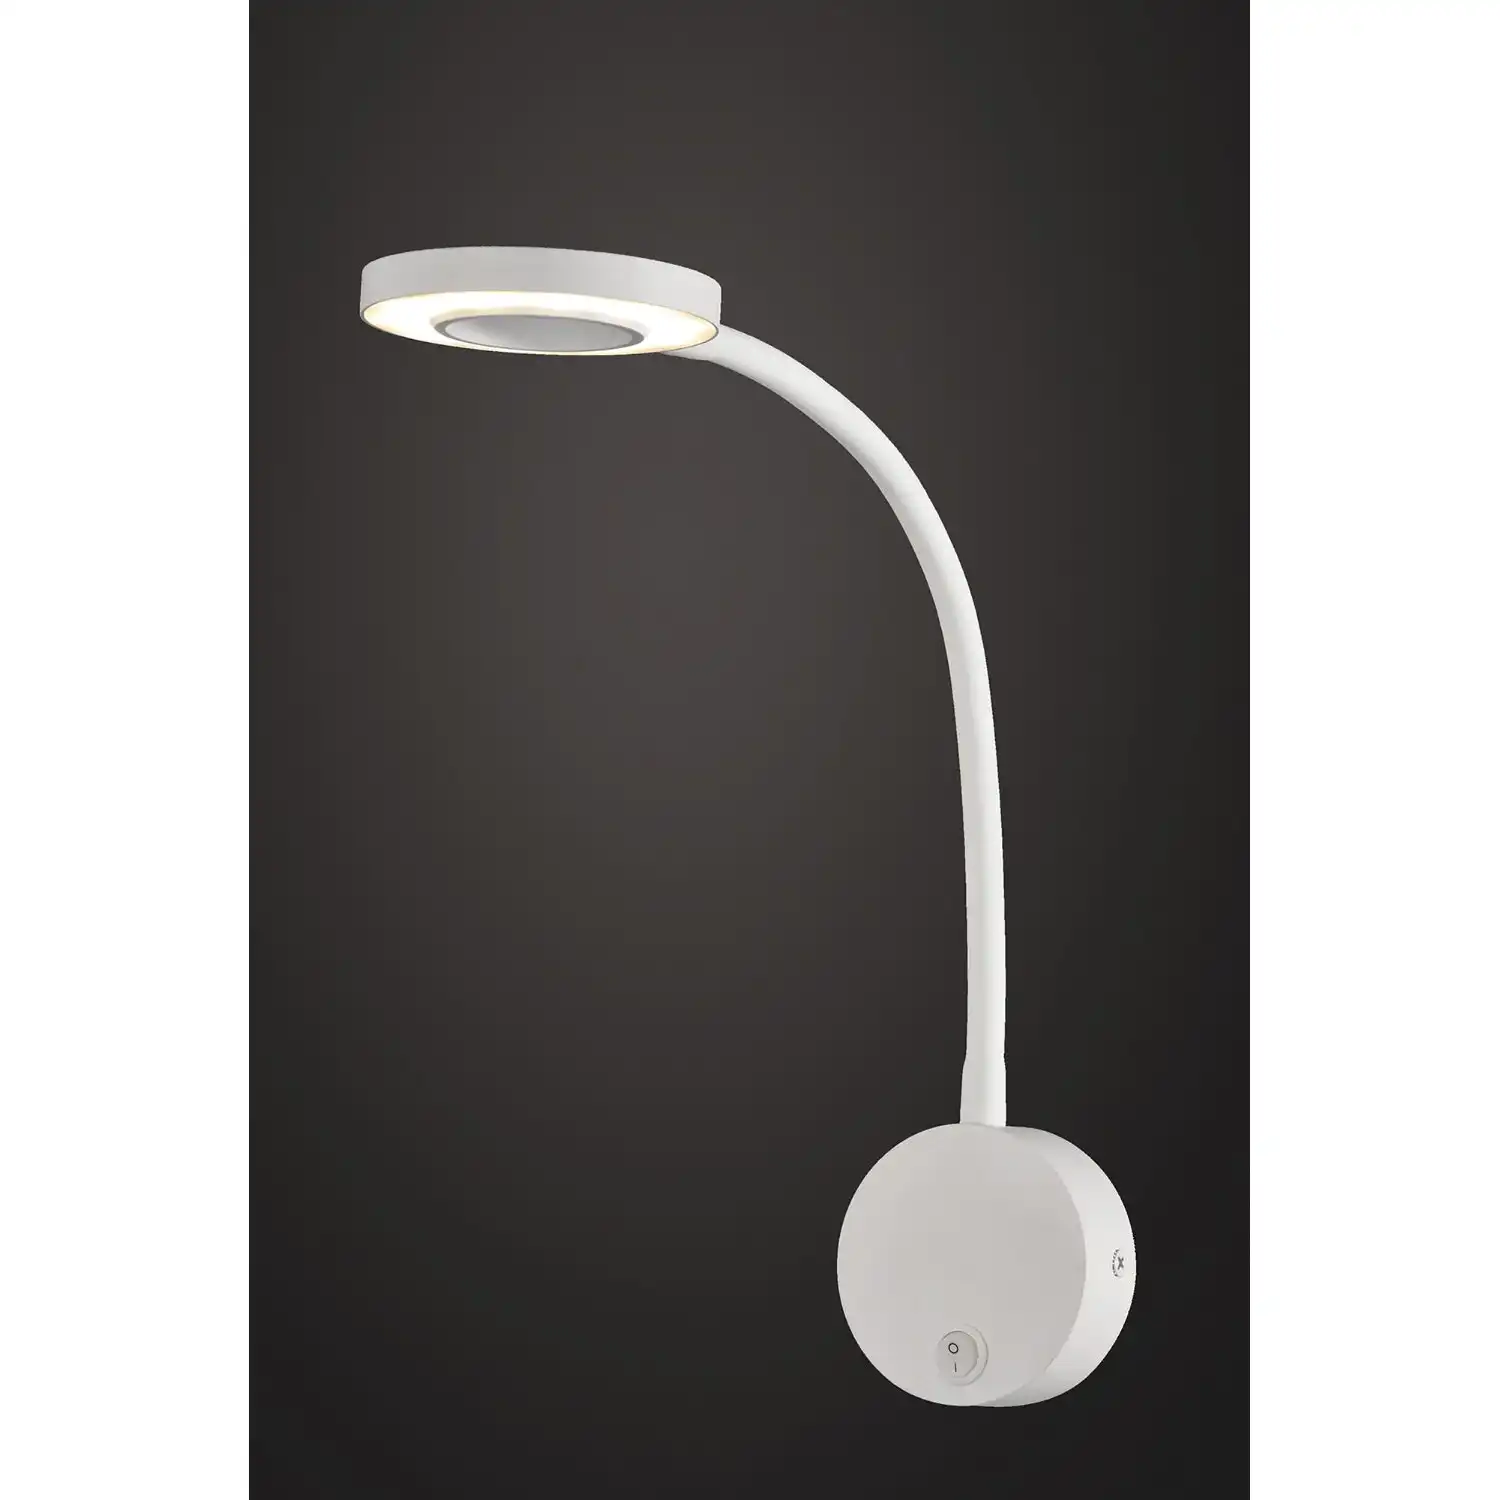 Boavista Switched Wall Lamp Reader 1L 5W LED Ring Head, 3000K, 261lm, Round Base Matt White, 3yrs Warranty